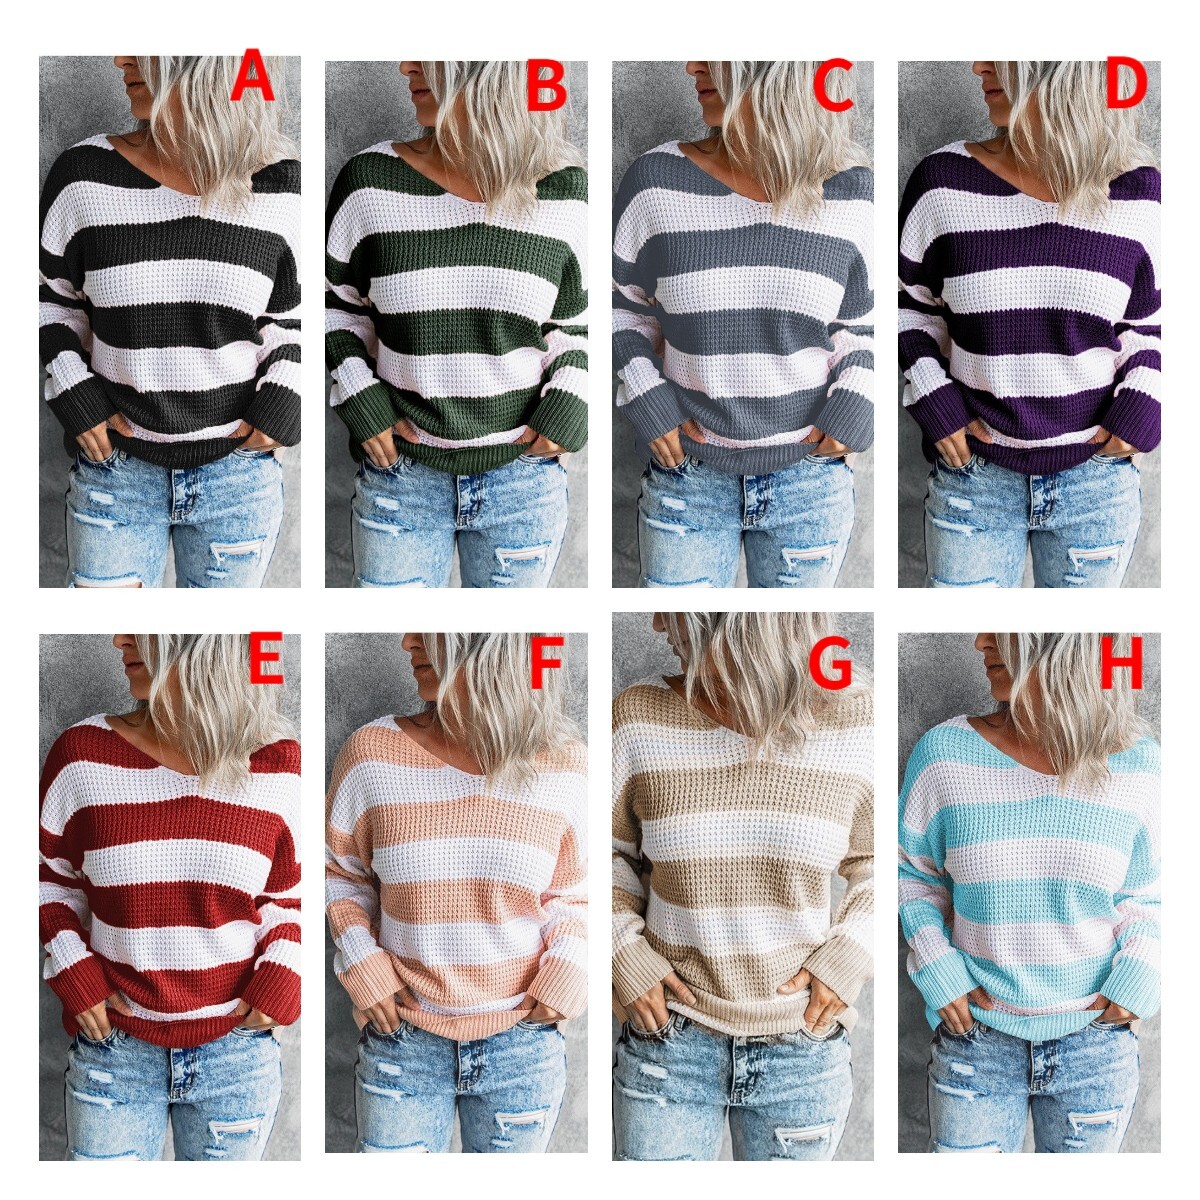 2021 Women's V-neck Stripe Stitched Knit Top Sweater C03656